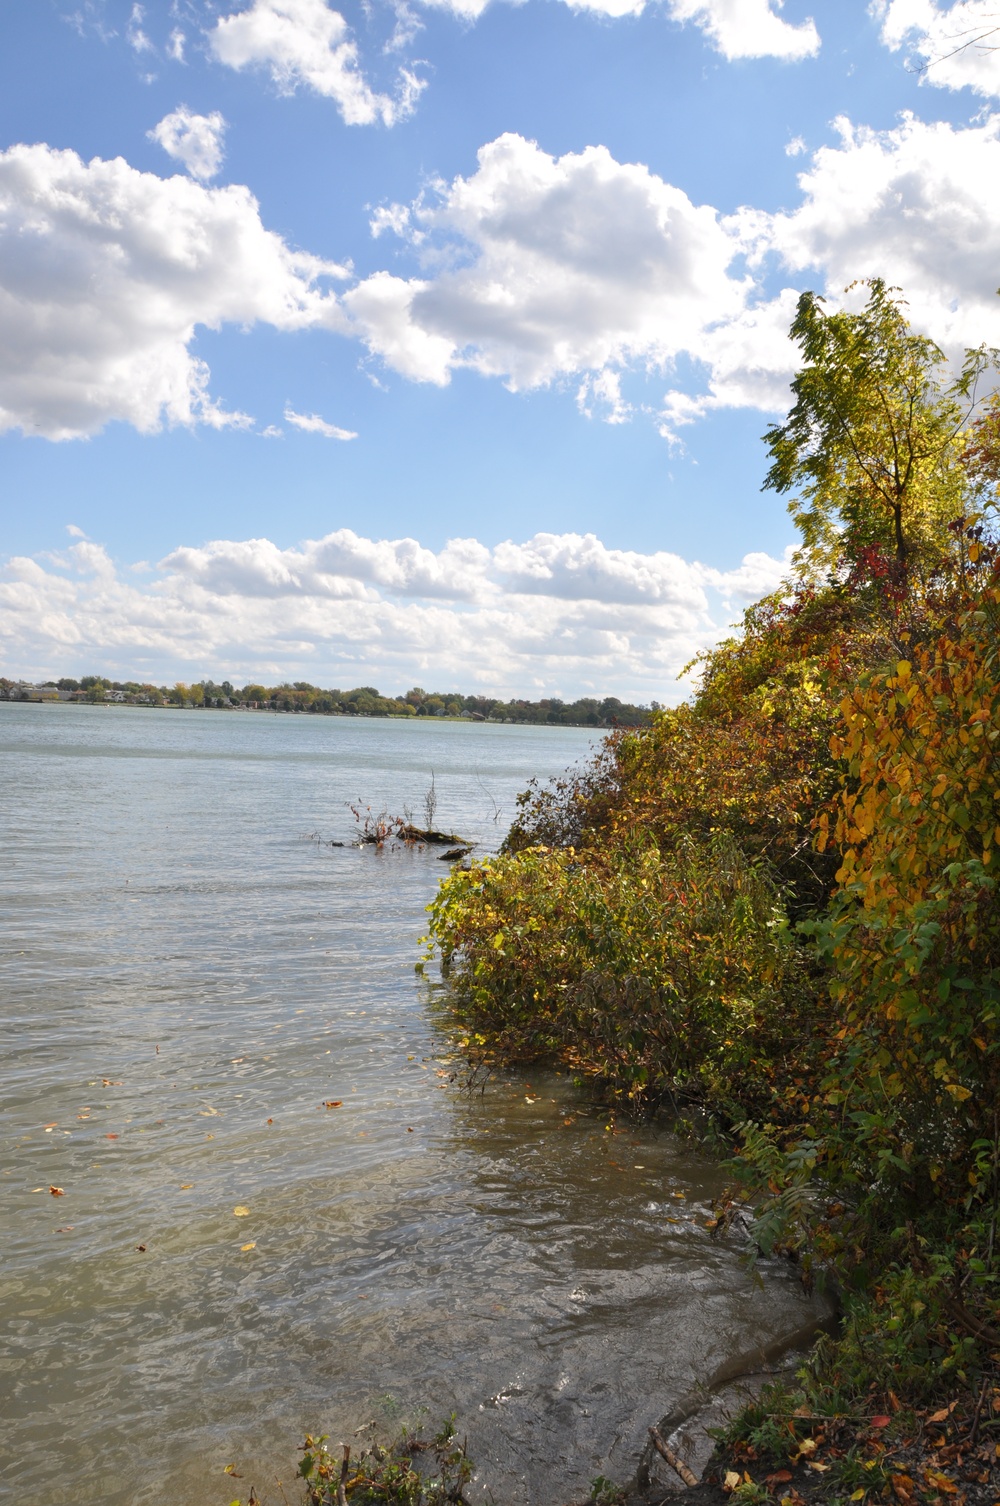 USACE awards contract to study seven Niagara River AOCs